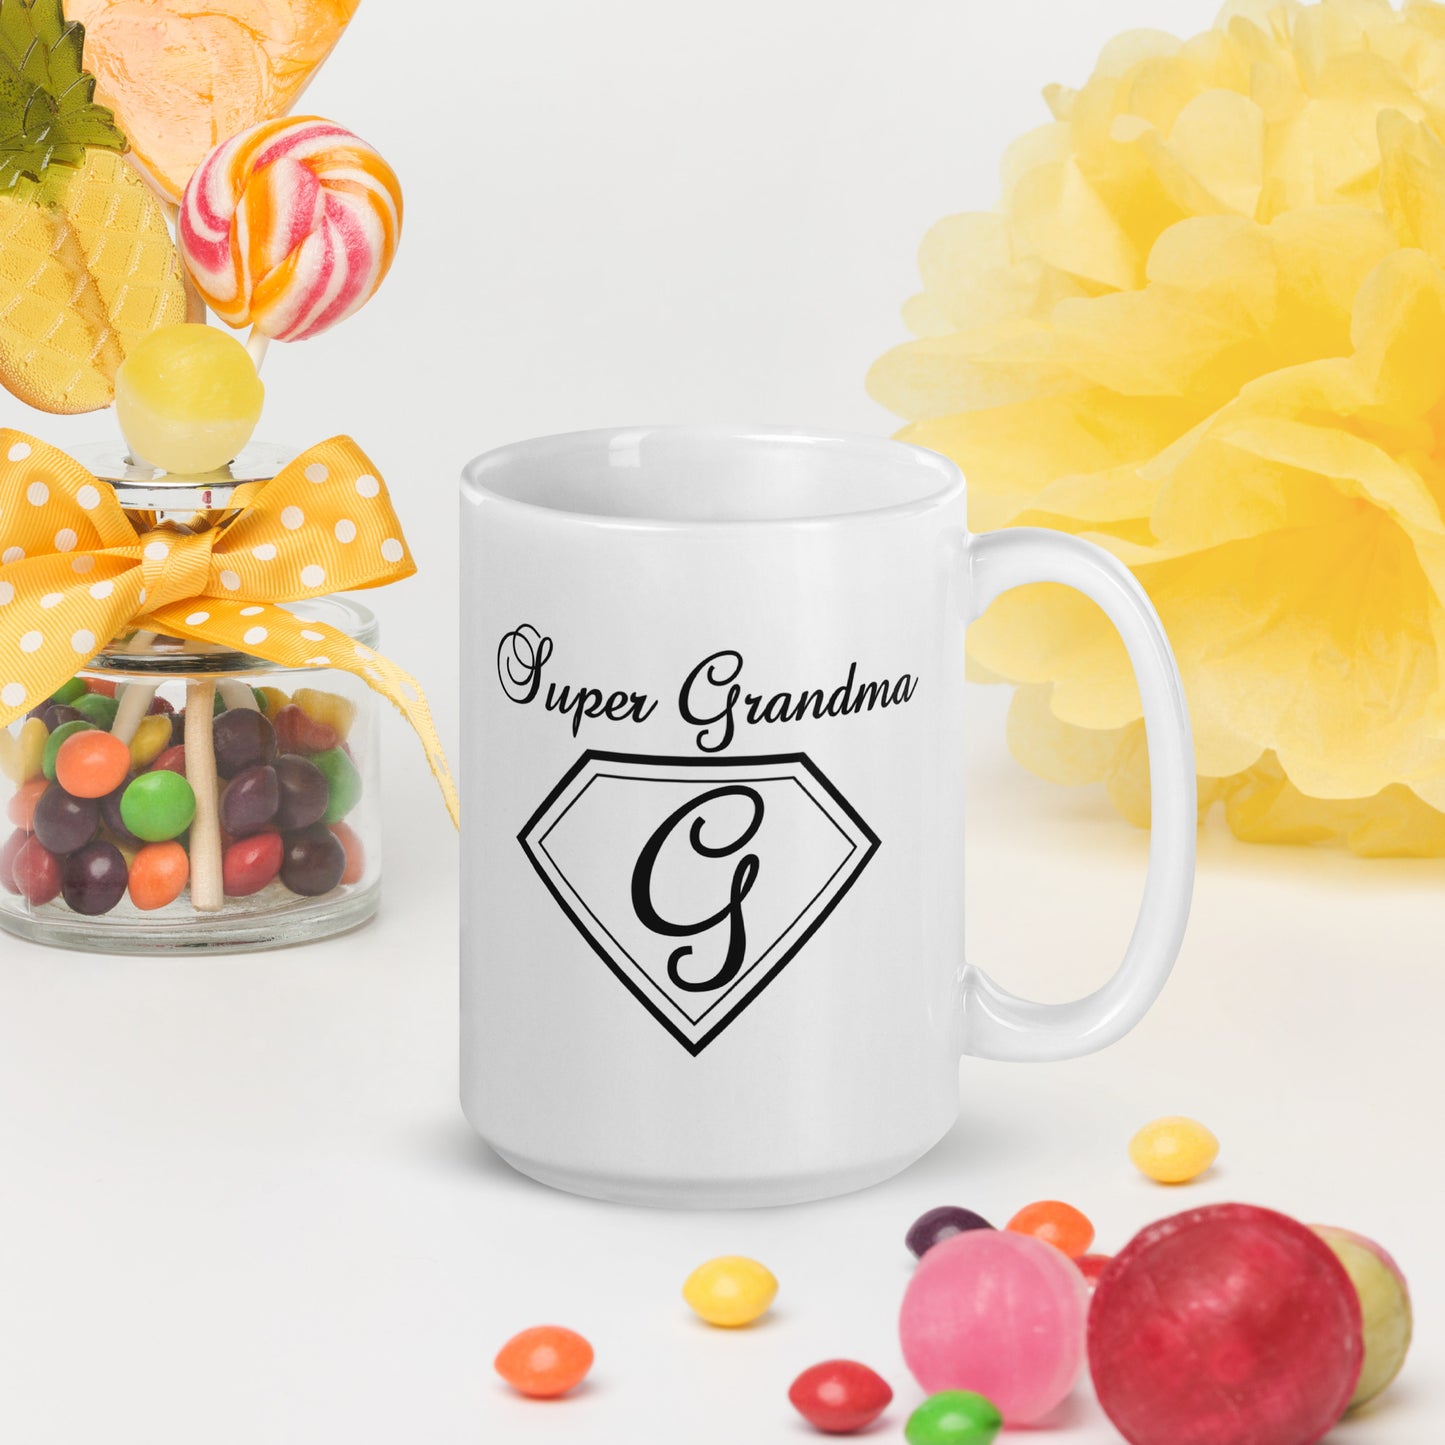 Super Grandma white glossy mug - Black Print